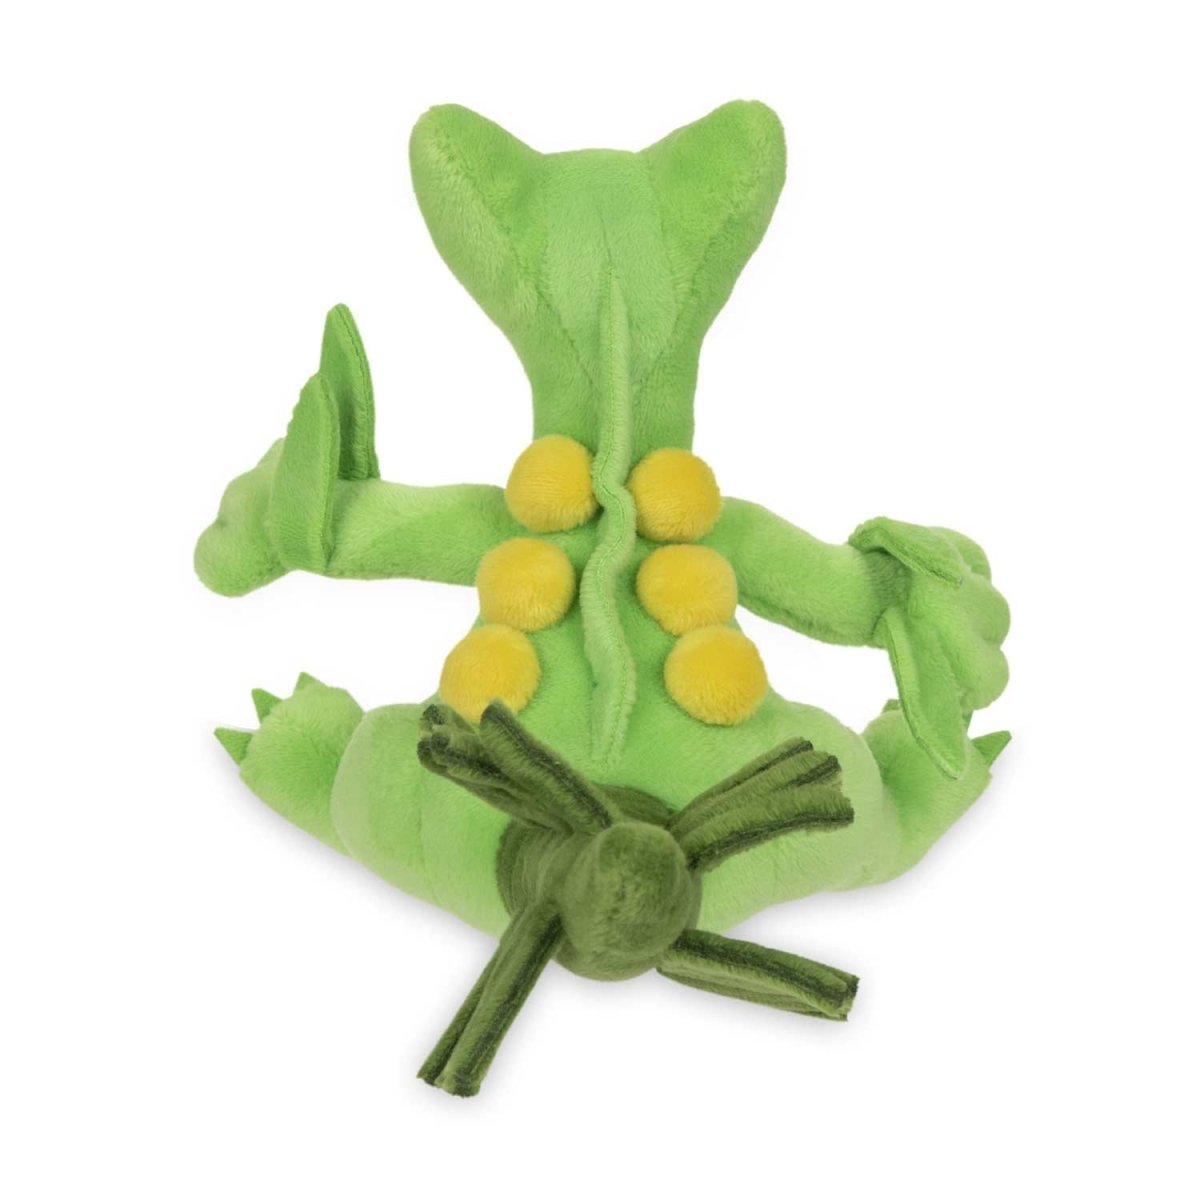 Pin by Jenna F on Plush and figures  Cute frogs, Cute plush, Cute stuffed  animals